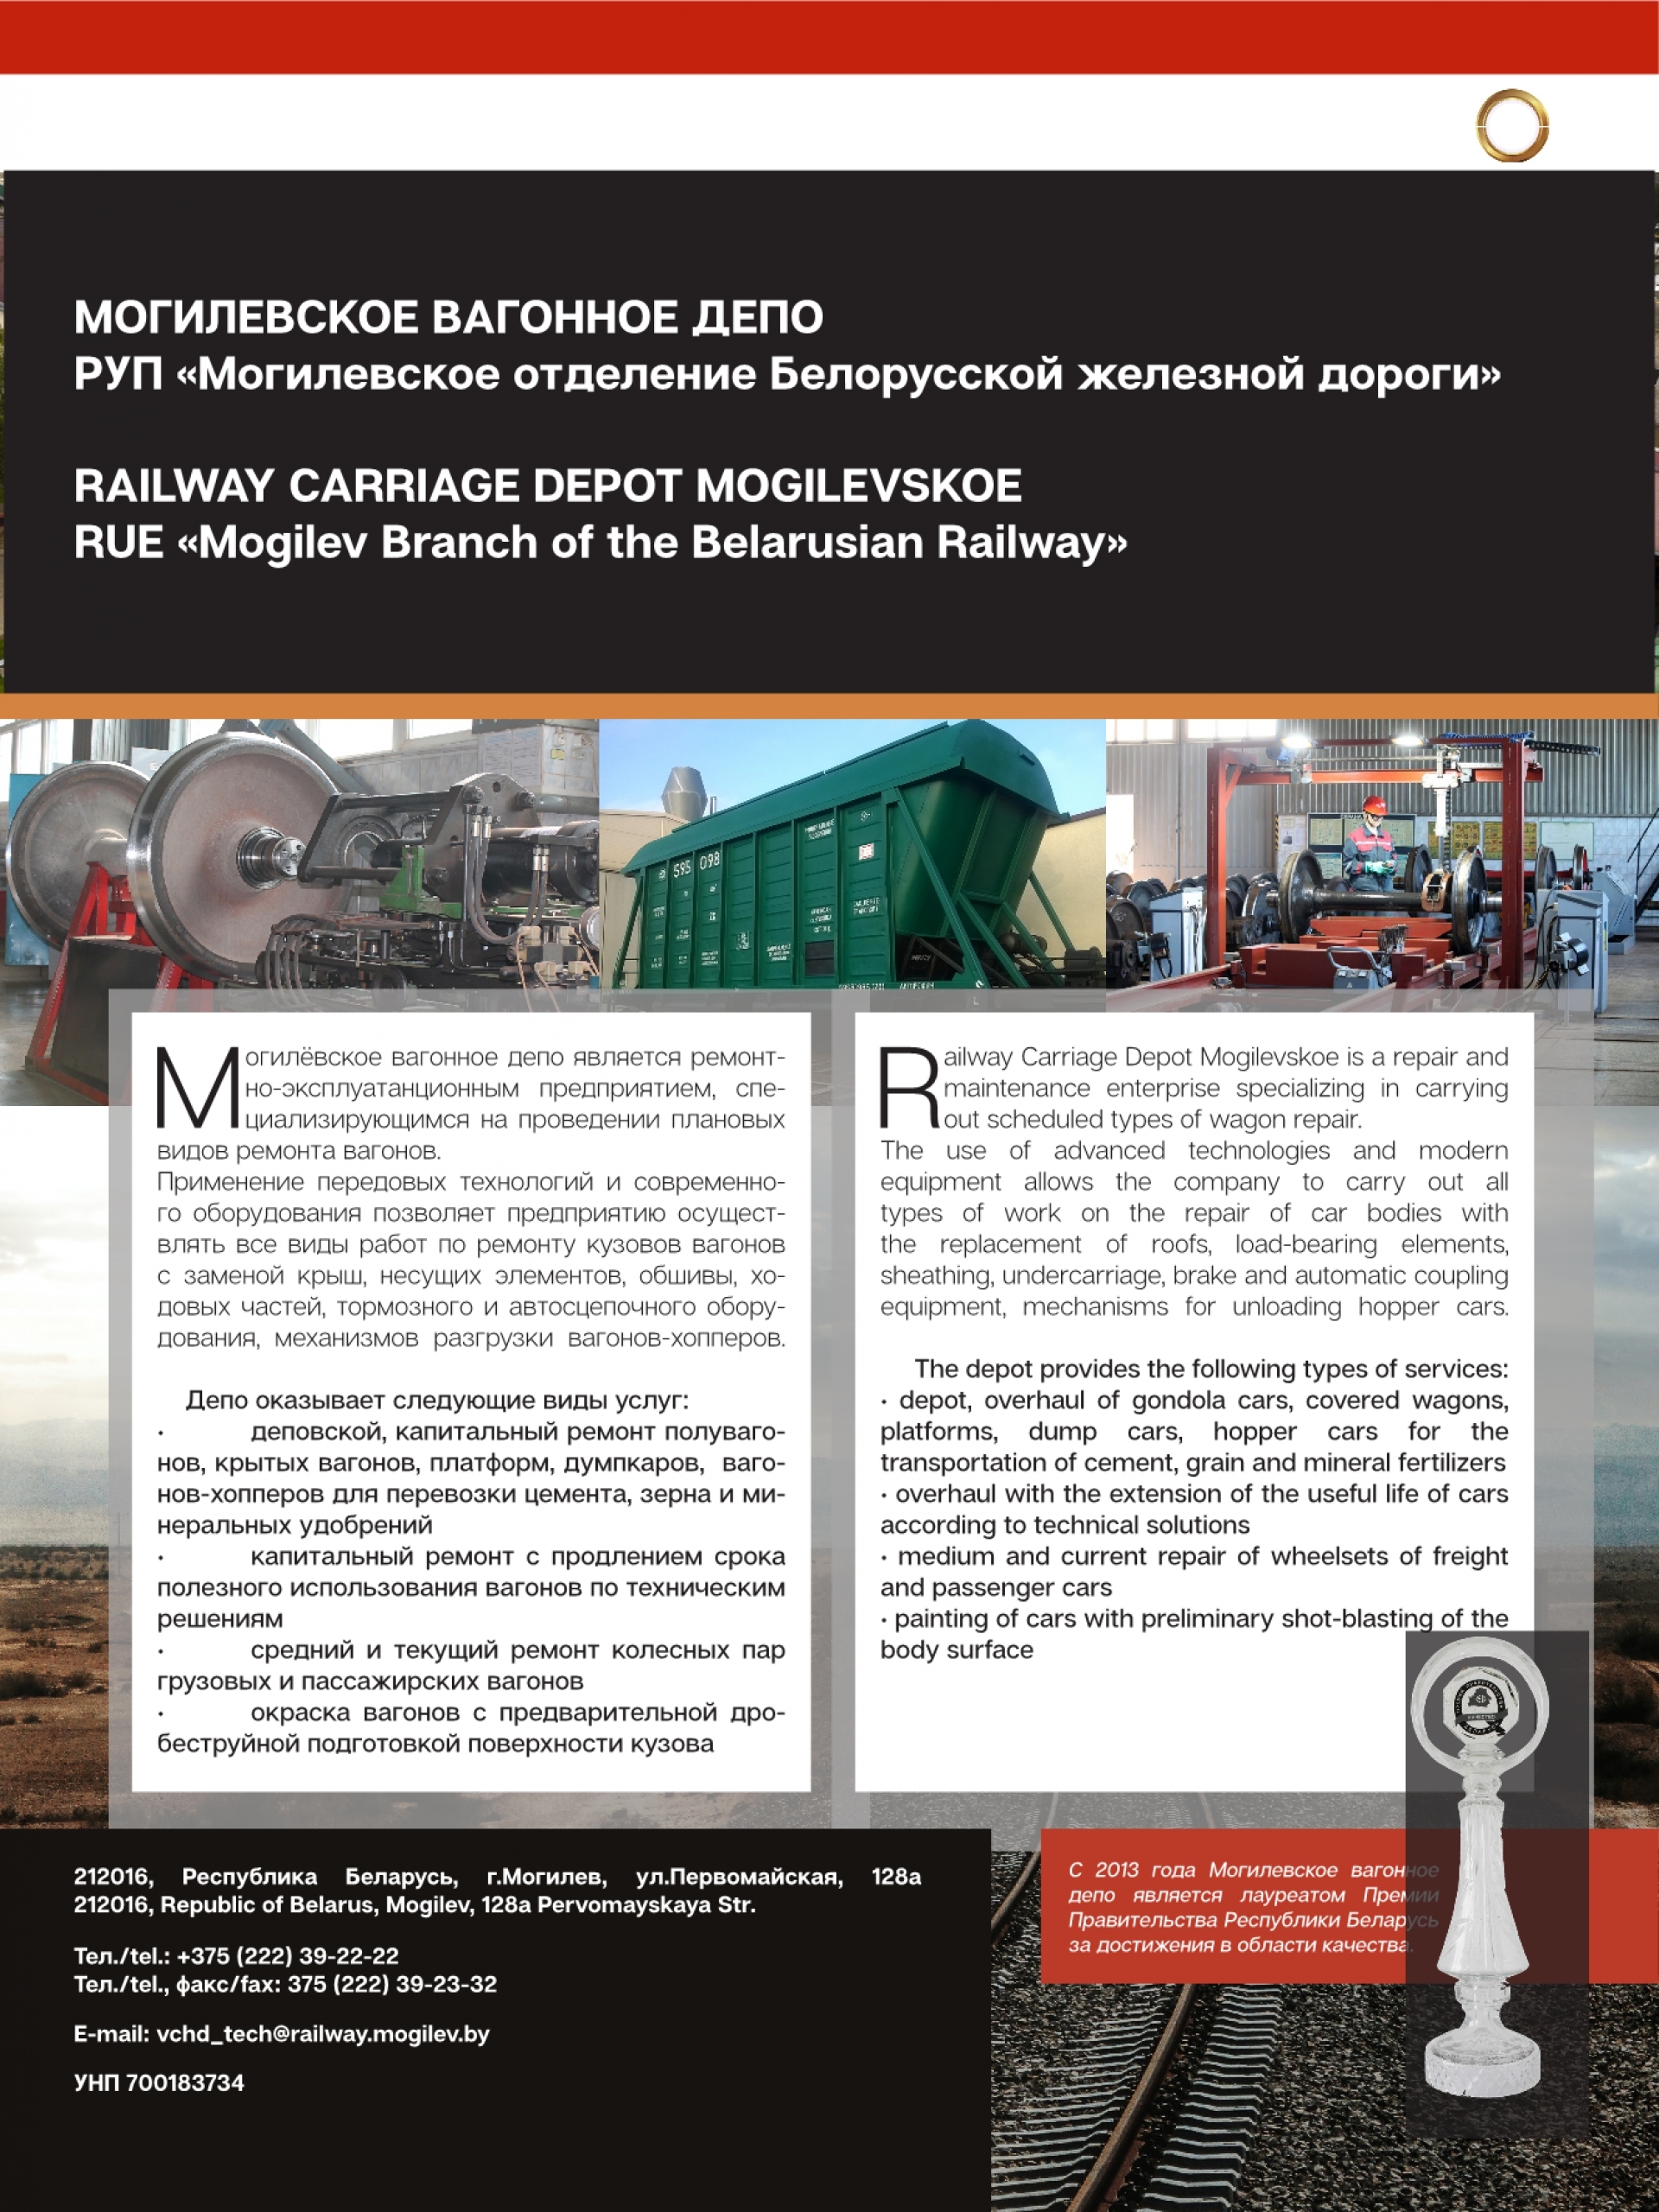 Railway Carriage Depot Mogilevskoe RUE «Mogilev Branch of the Belarusian Railway»